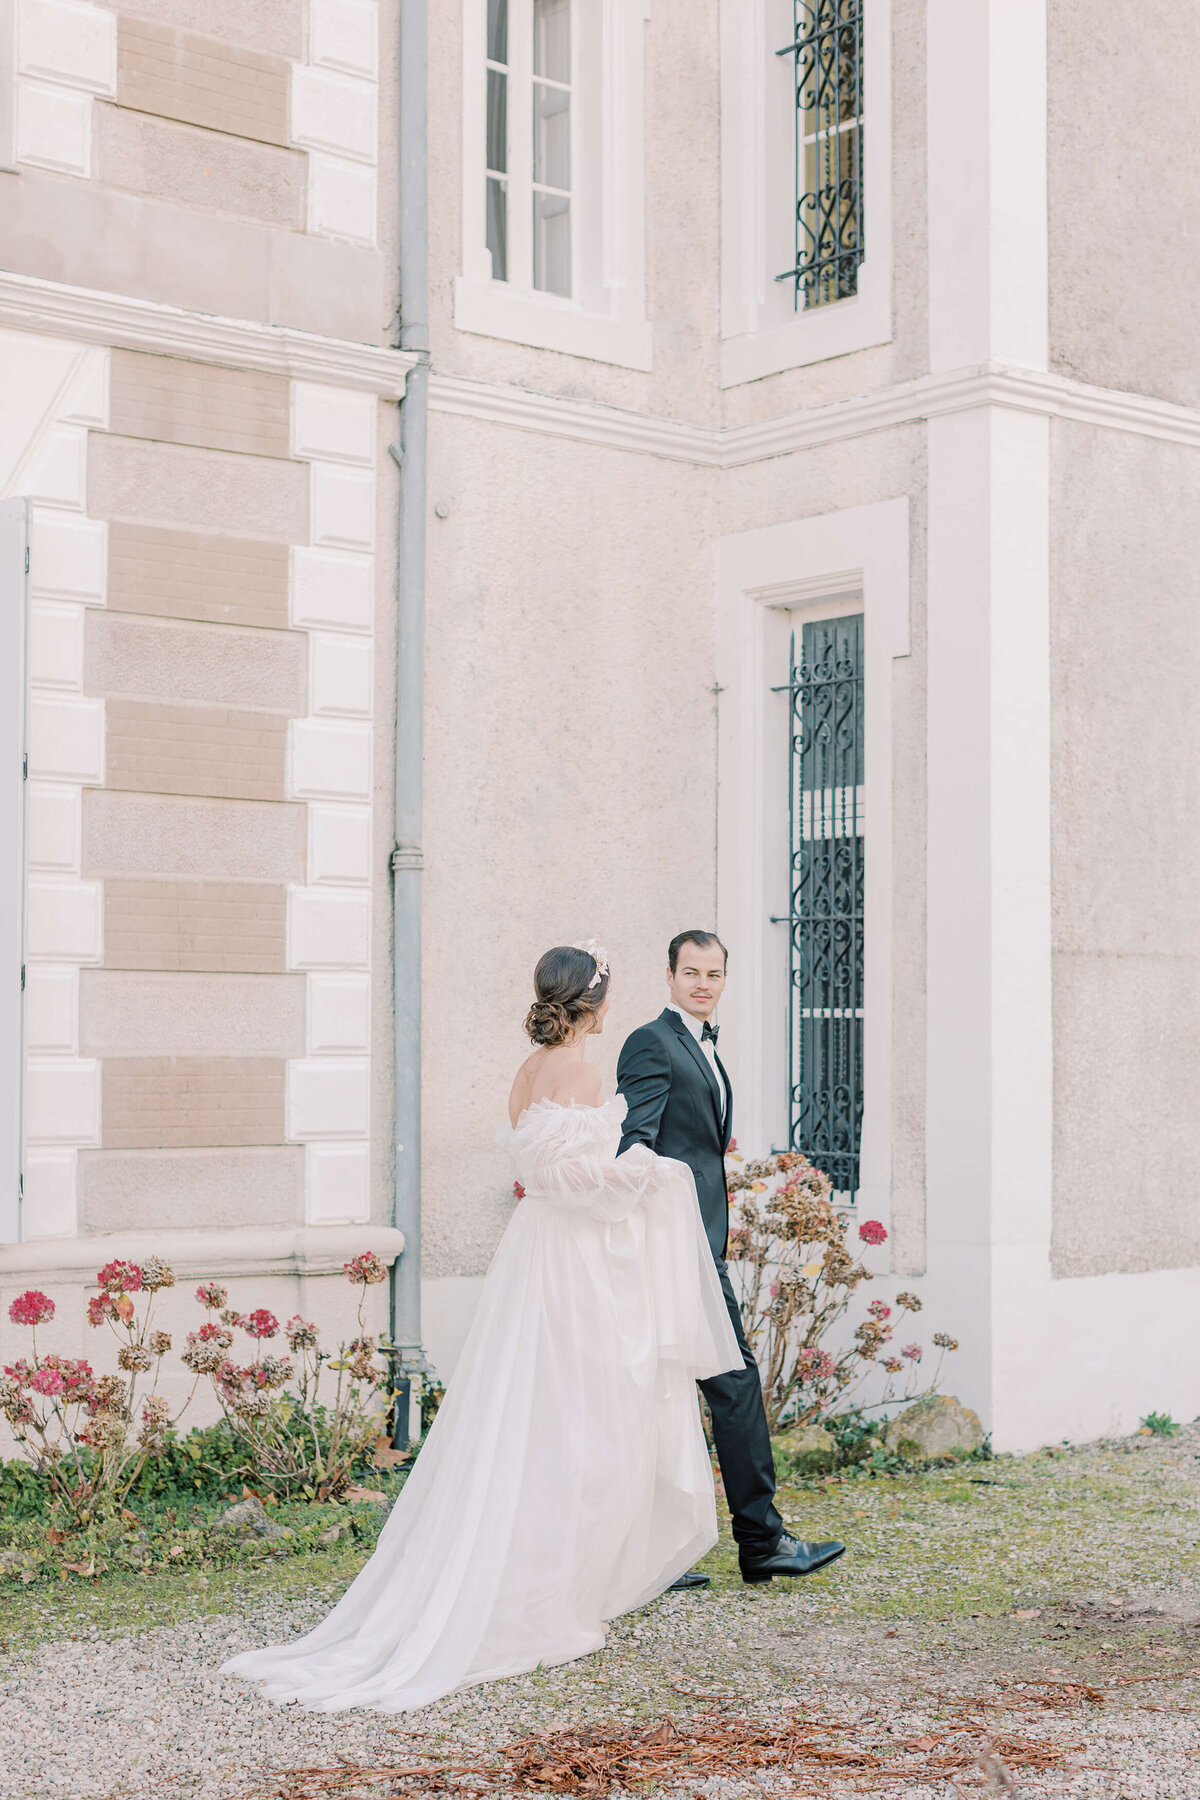 Winter Wedding at Chateau Saint-Joseph - Jeanette Merstrand Photography - Victoria Engelen Flowers_0060